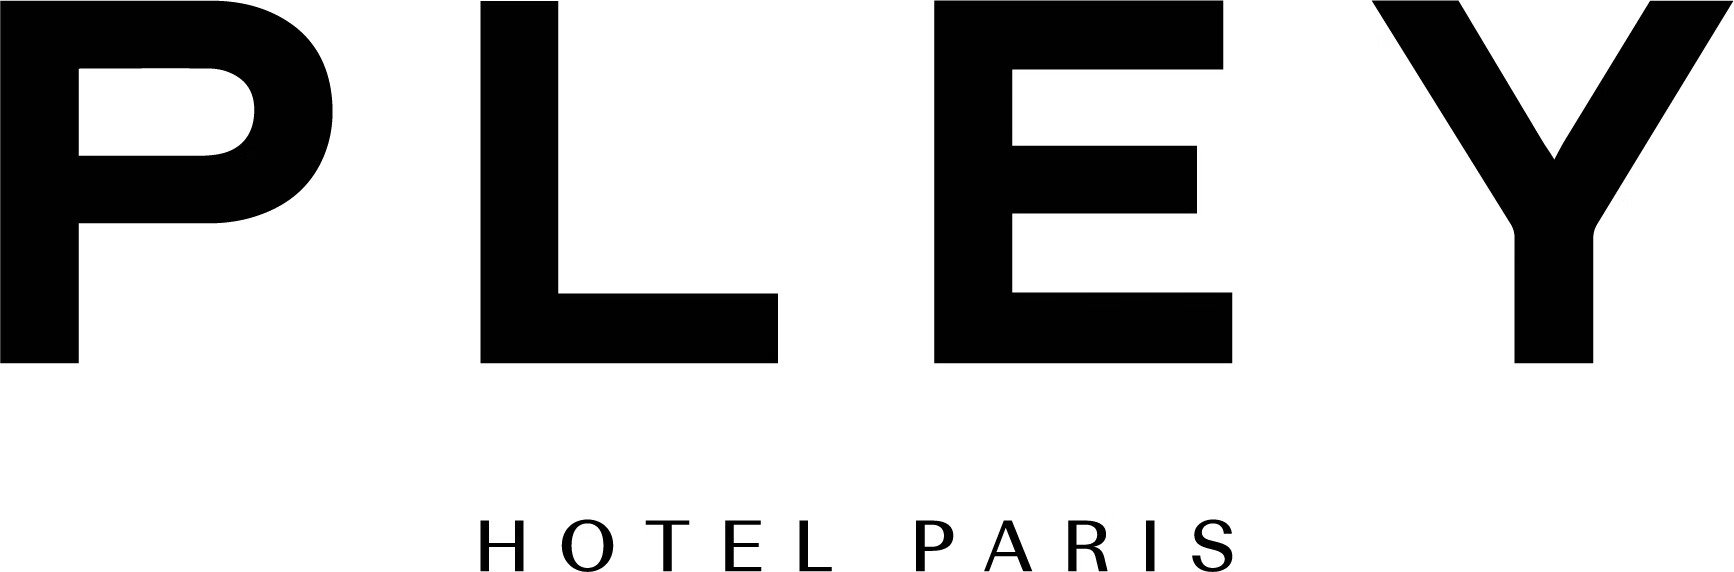 logo-pleyhotel-text.jpg